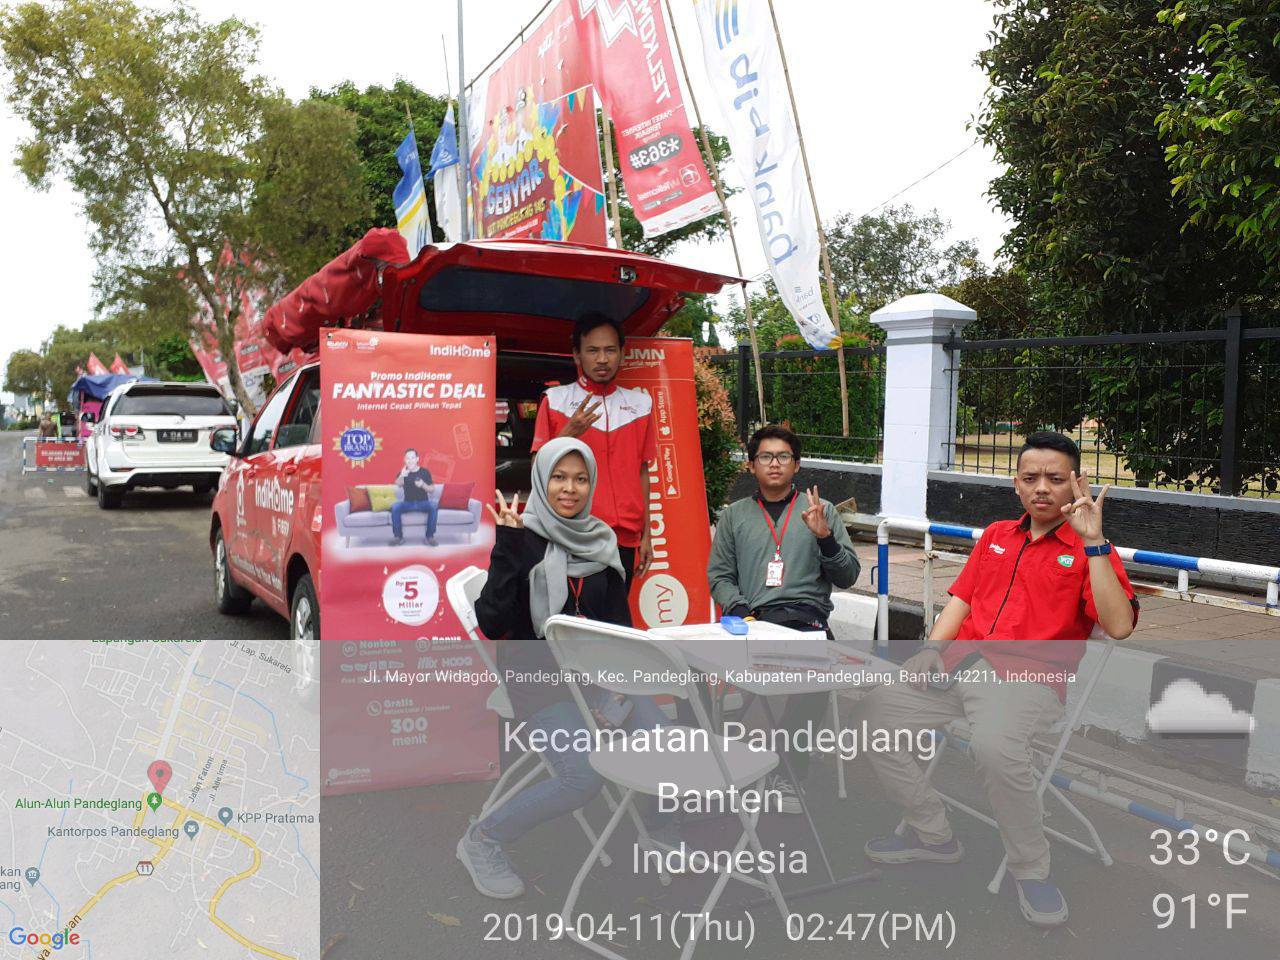 Harga Indihome Perbulan Petamburan Tanah Abang Jakarta Pusat